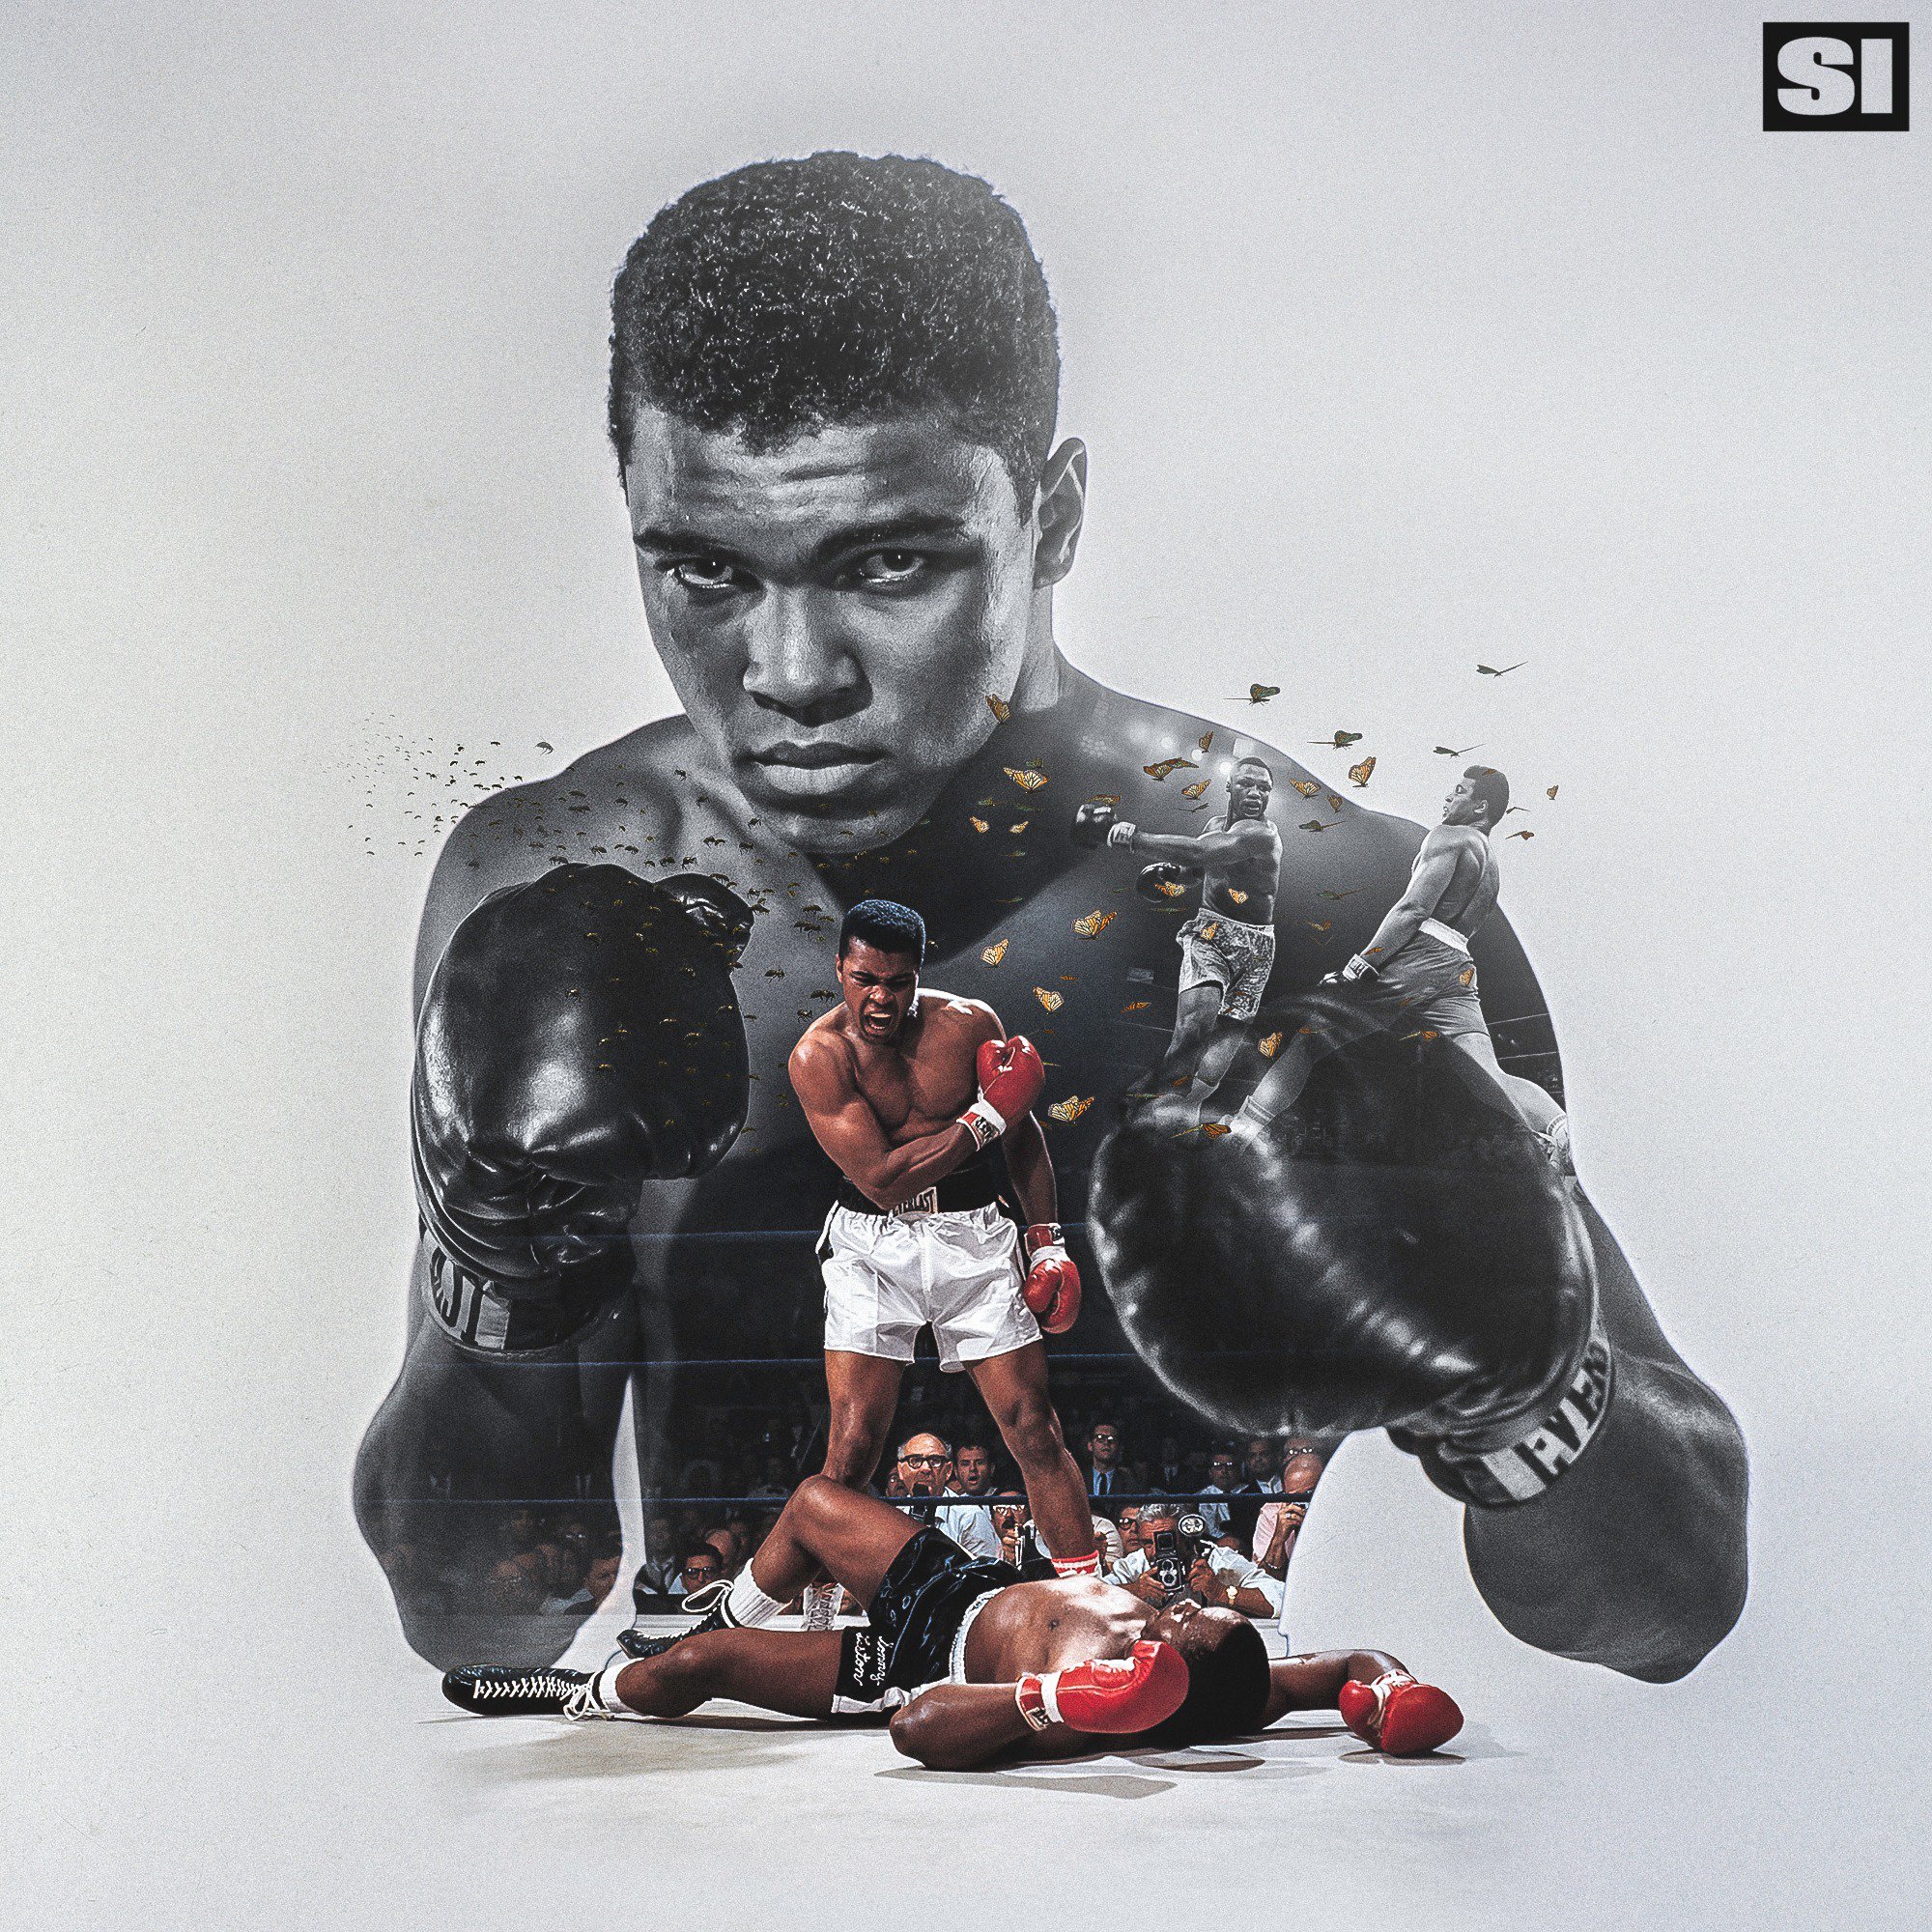 Happy Birthday to the late, great Muhammad Ali 